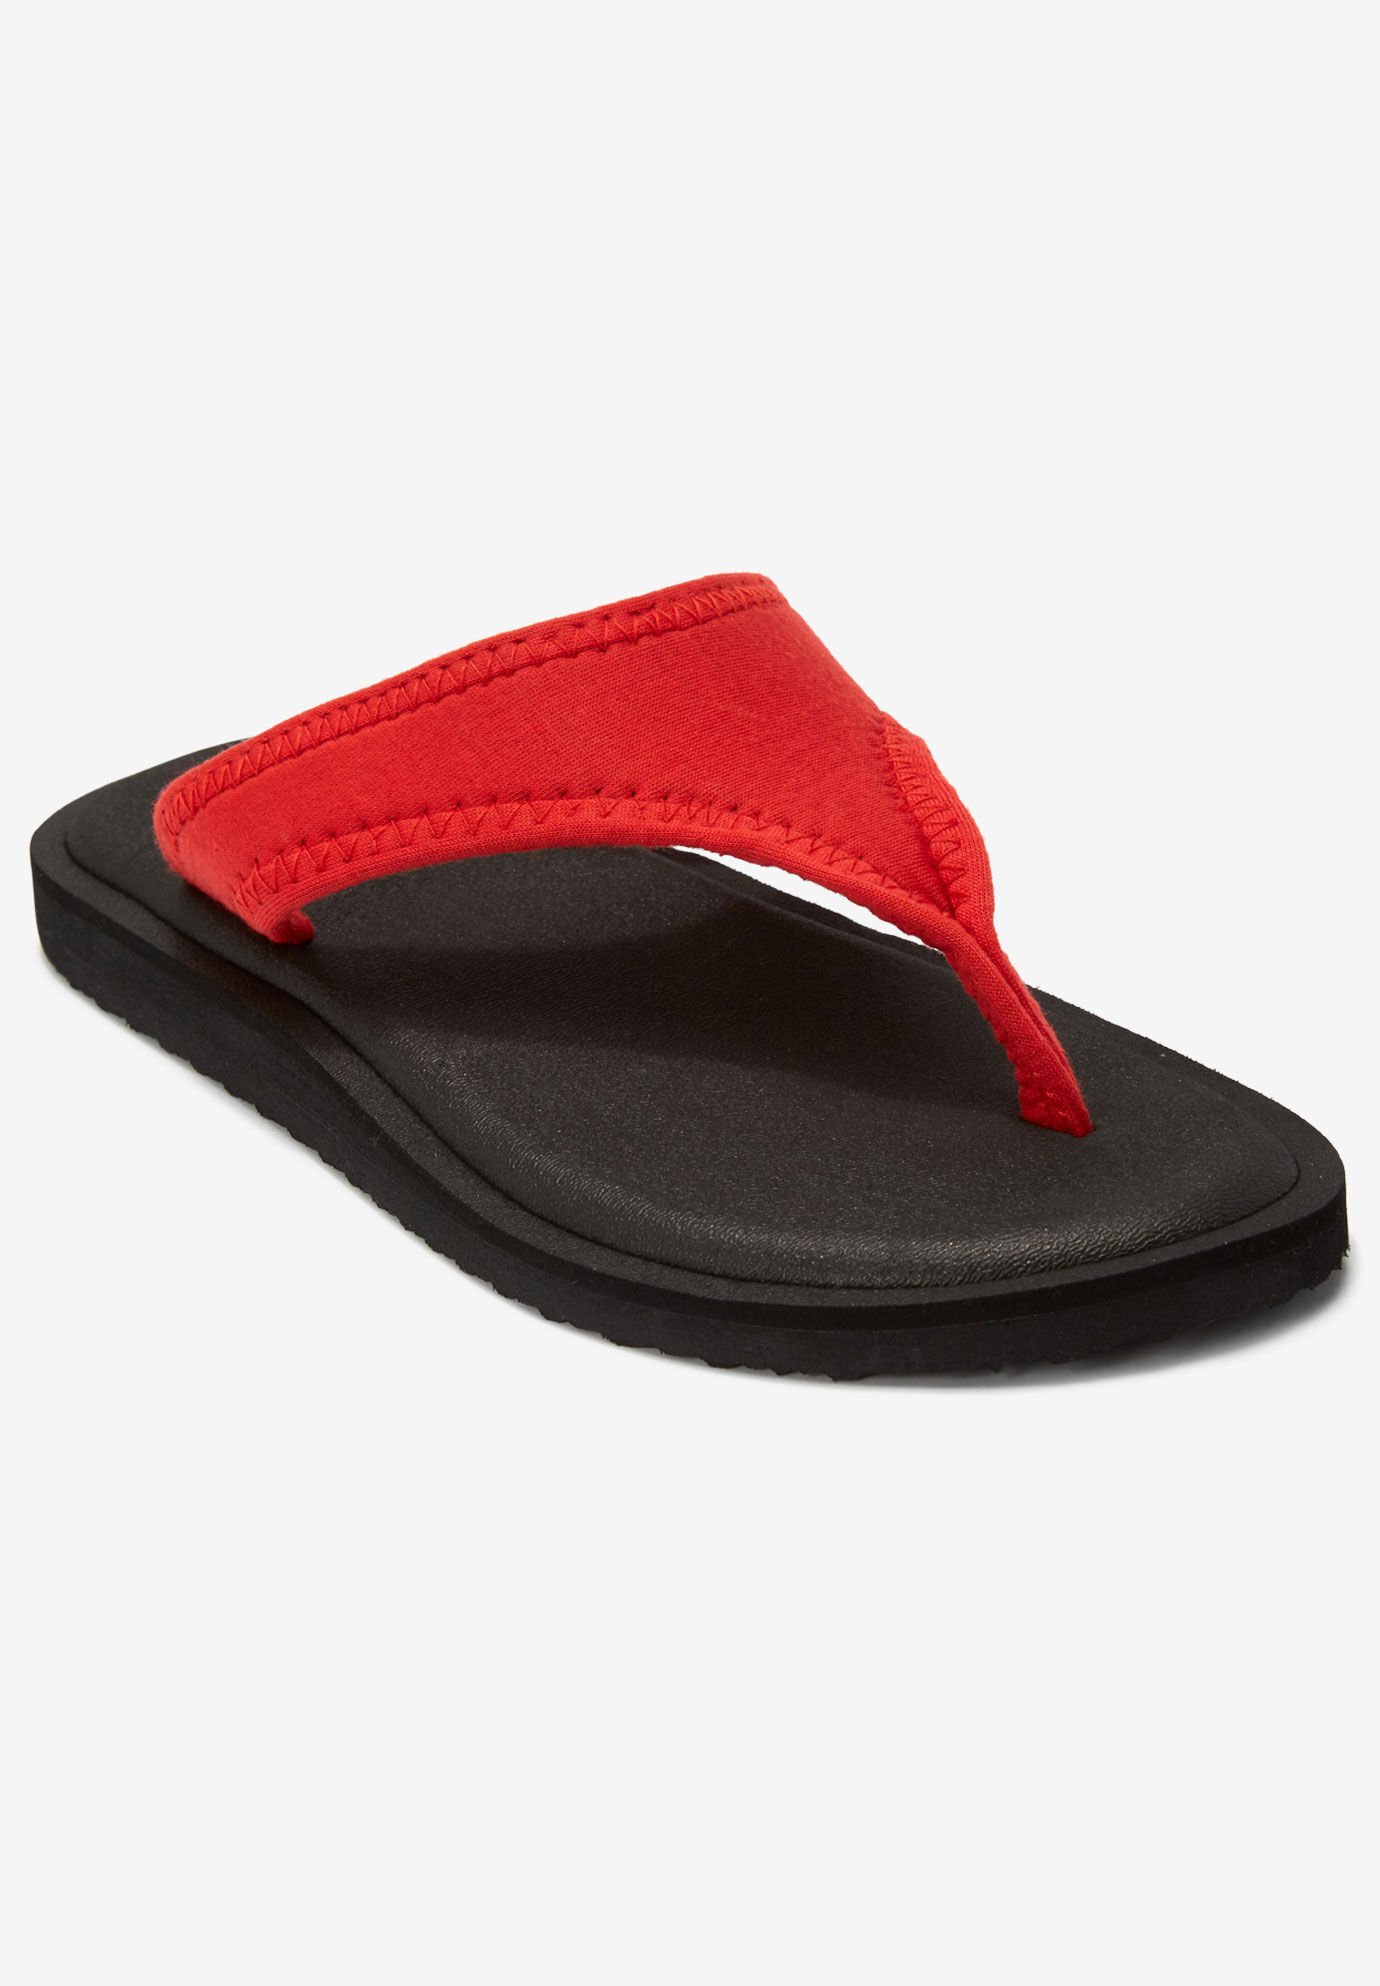 women's wide width sandals